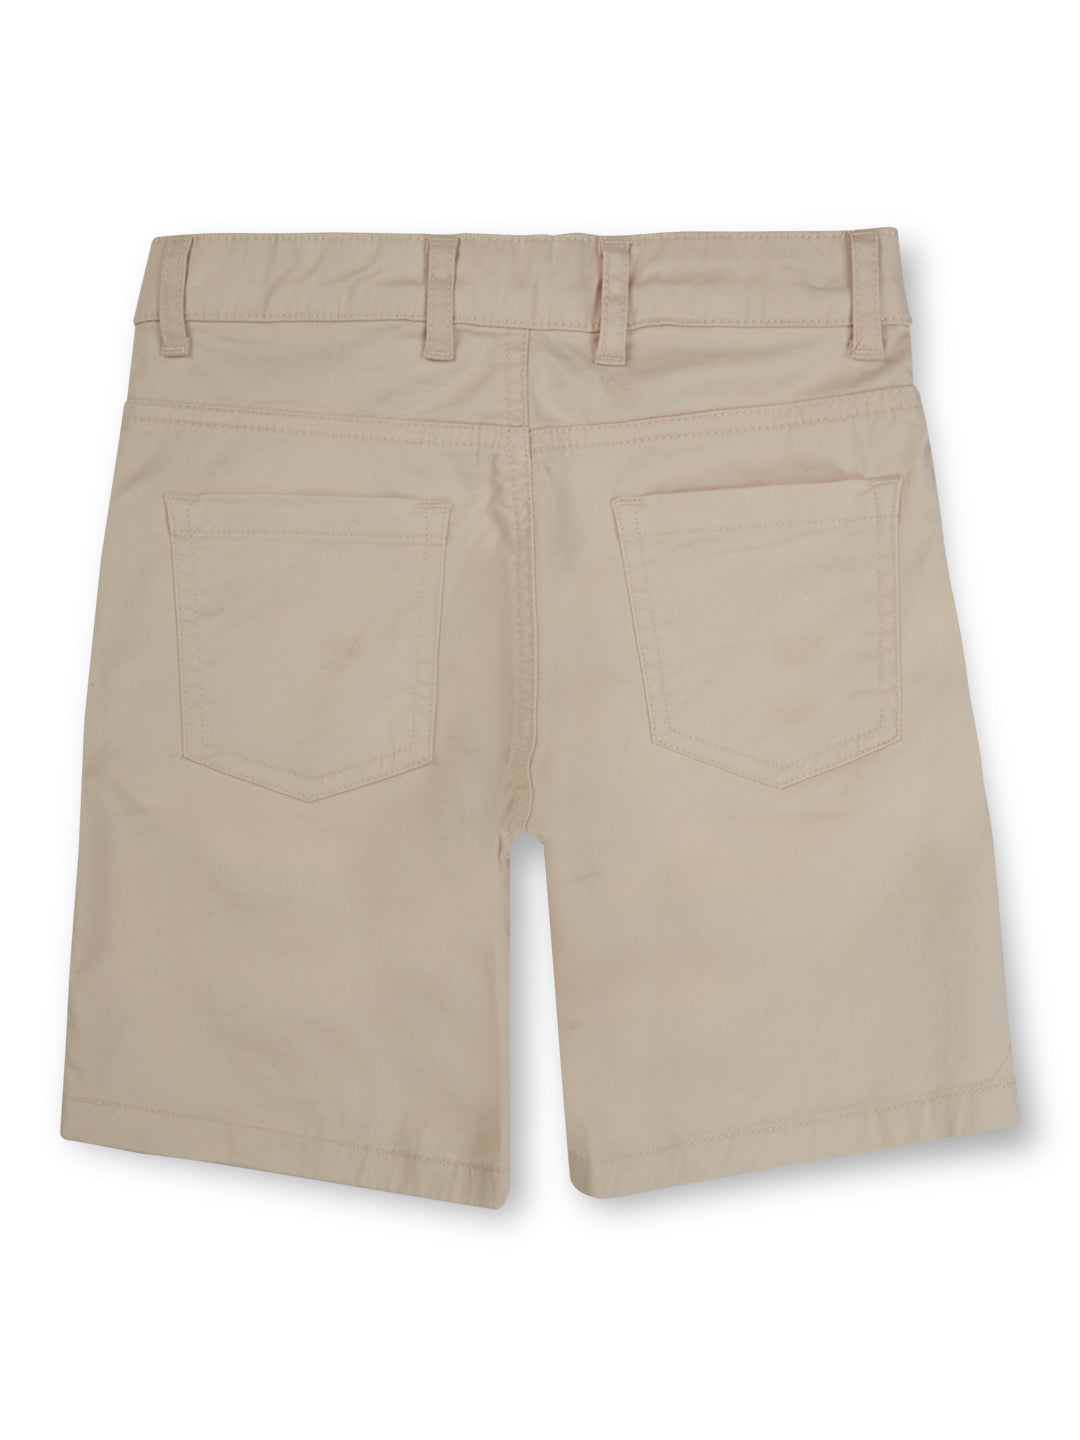 Boys woven Beige bermuda shorts